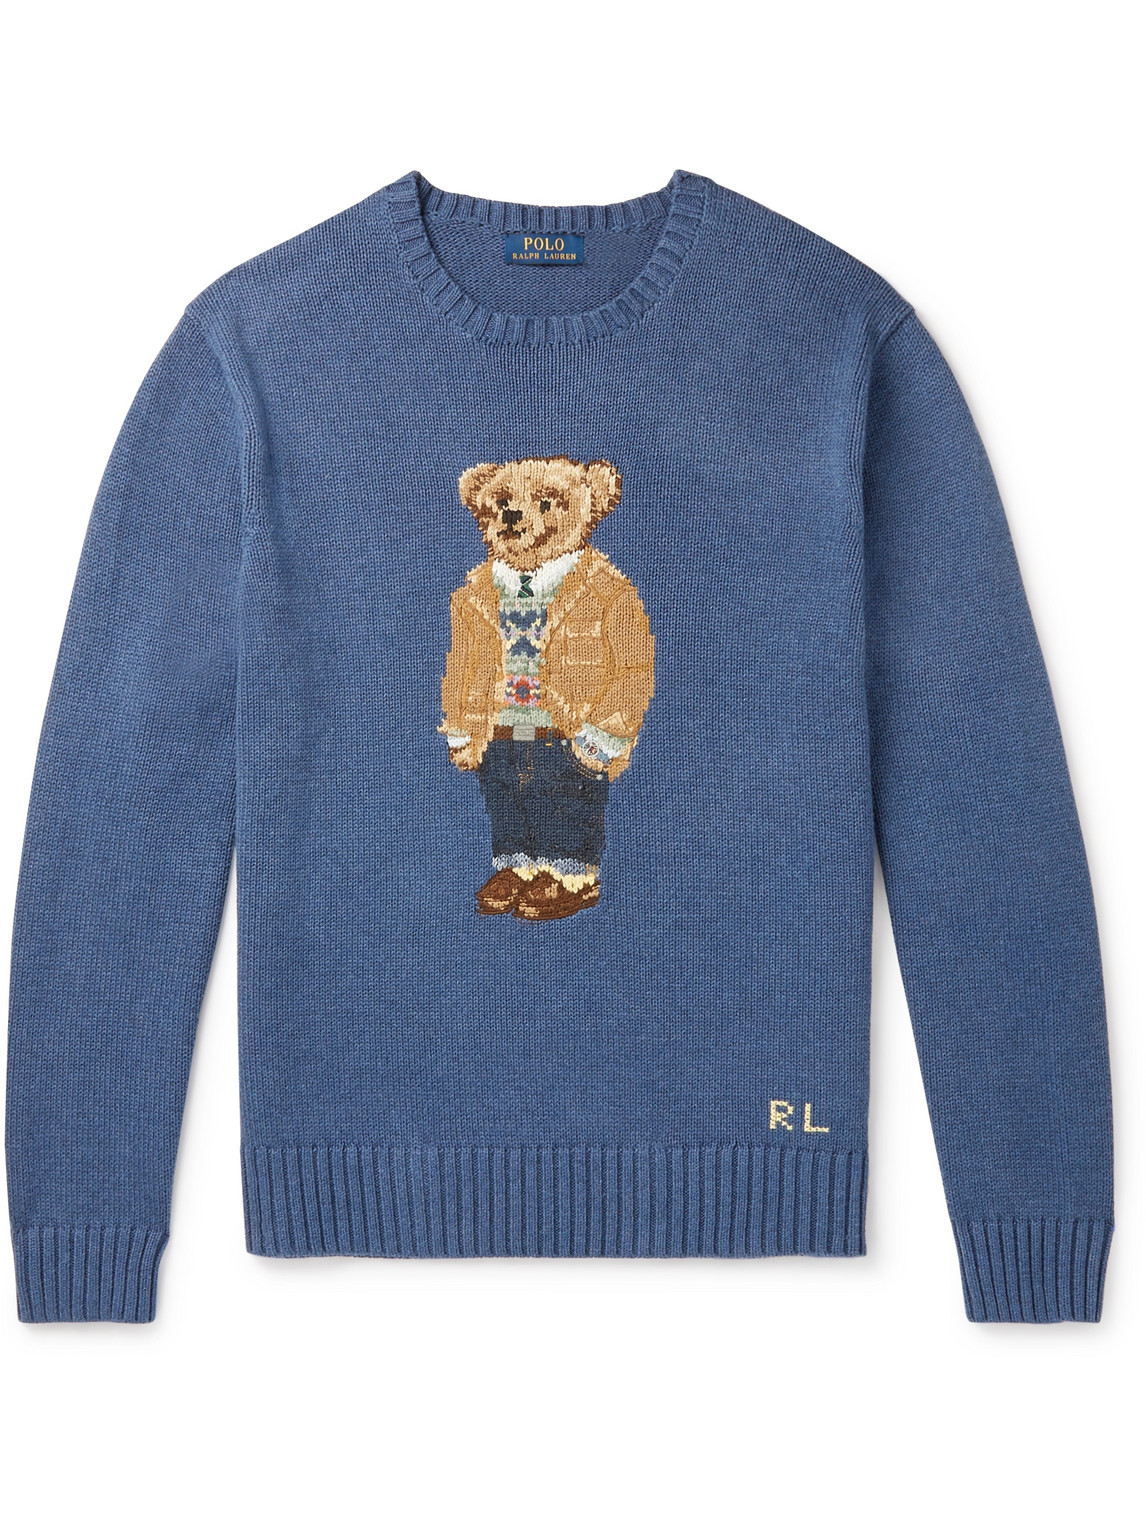 Polo Ralph Lauren Intarsia Cotton Sweater In Blue